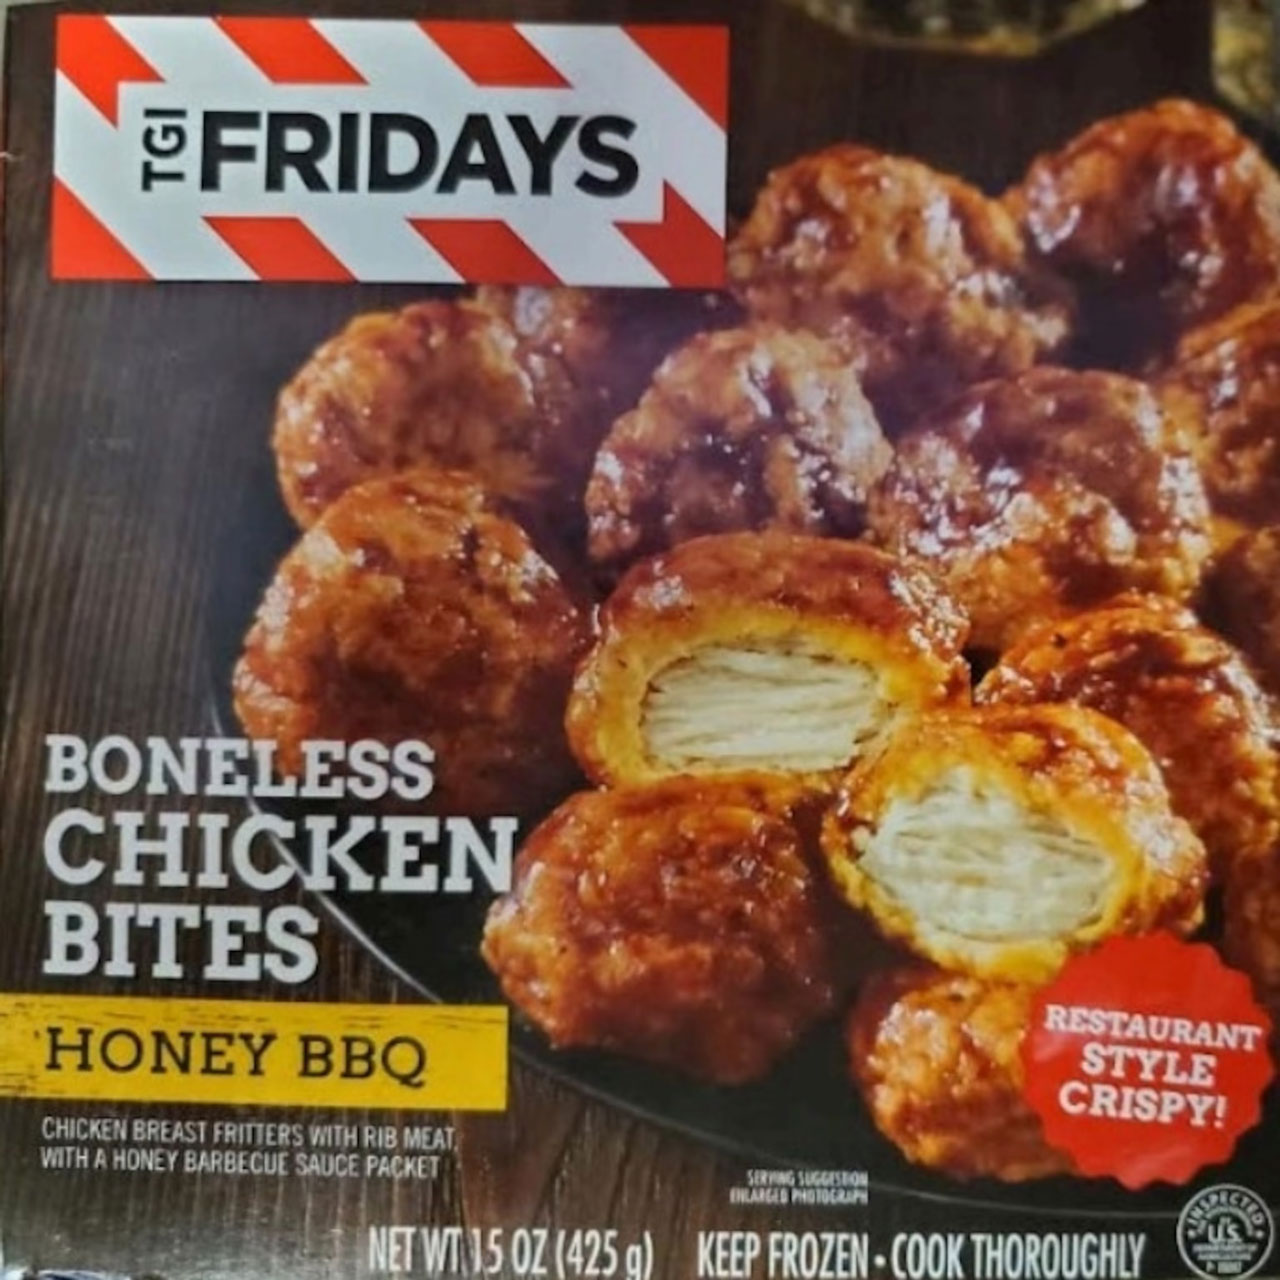 recalled tgi fridays boneless chicken bites